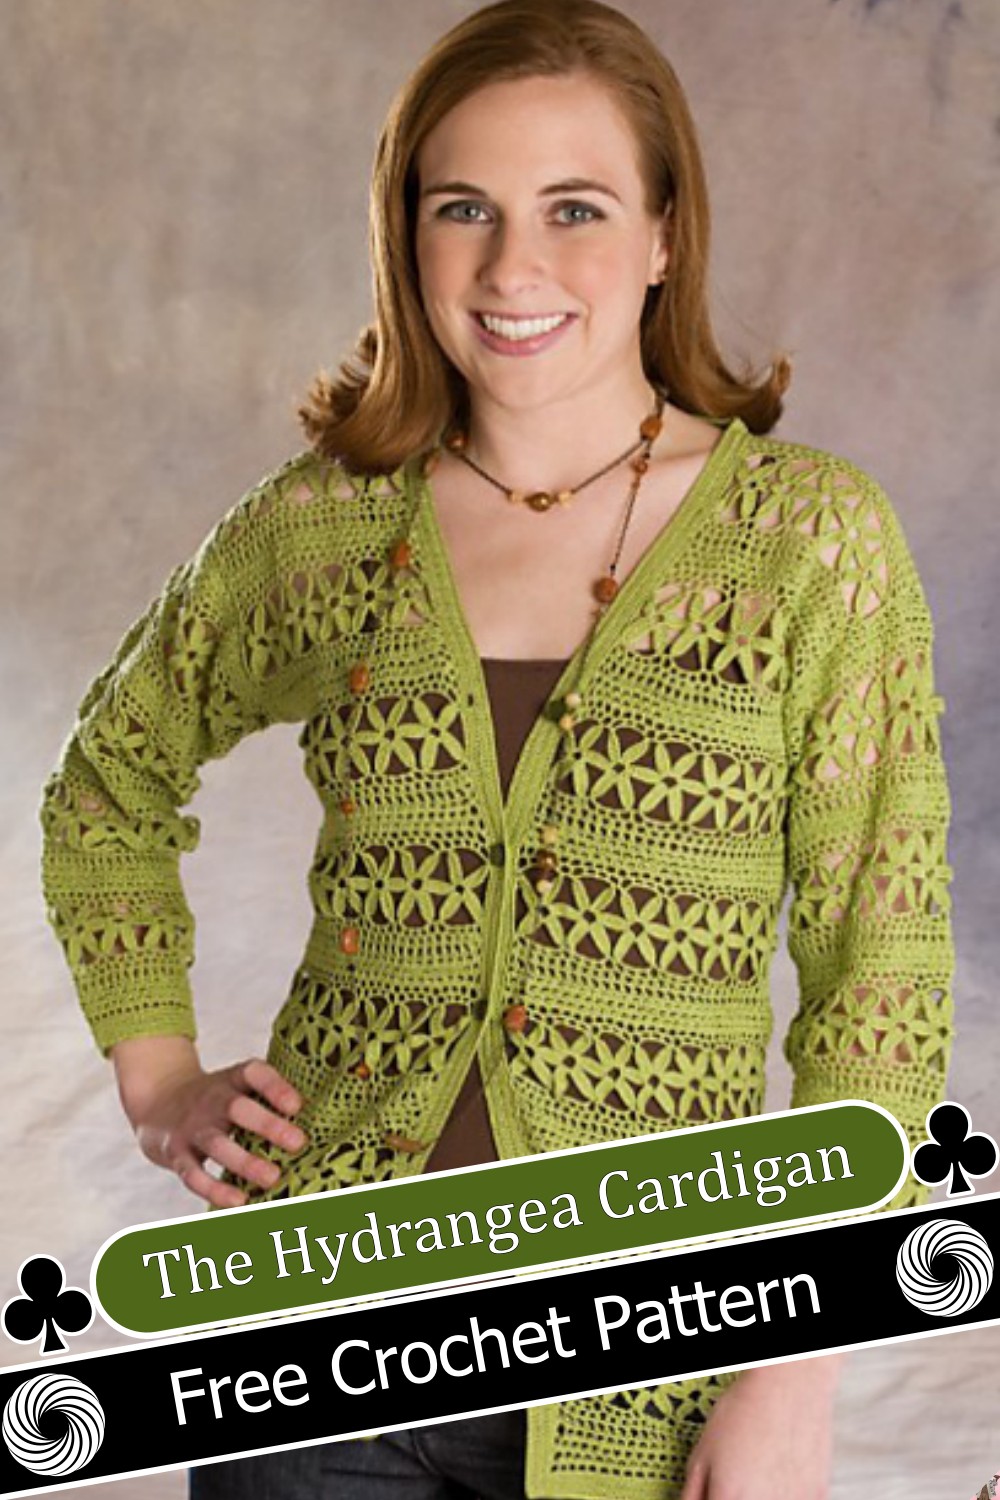 The Hydrangea Cardigan